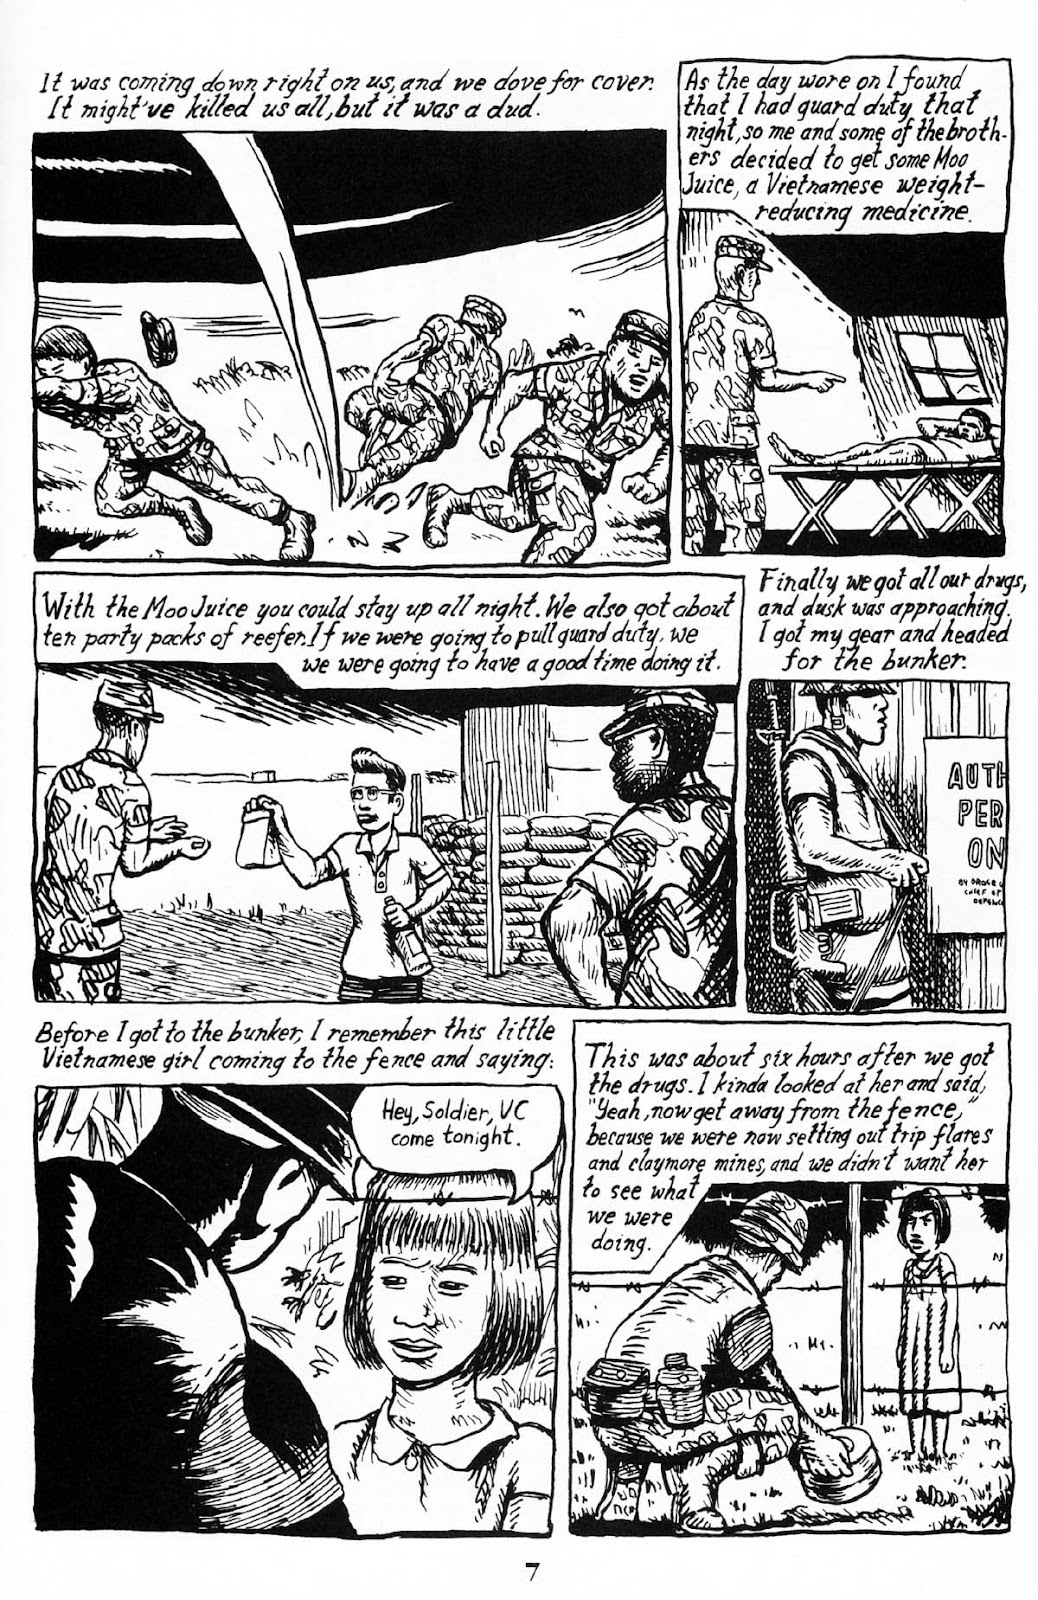 American Splendor: Unsung Hero issue 2 - Page 9